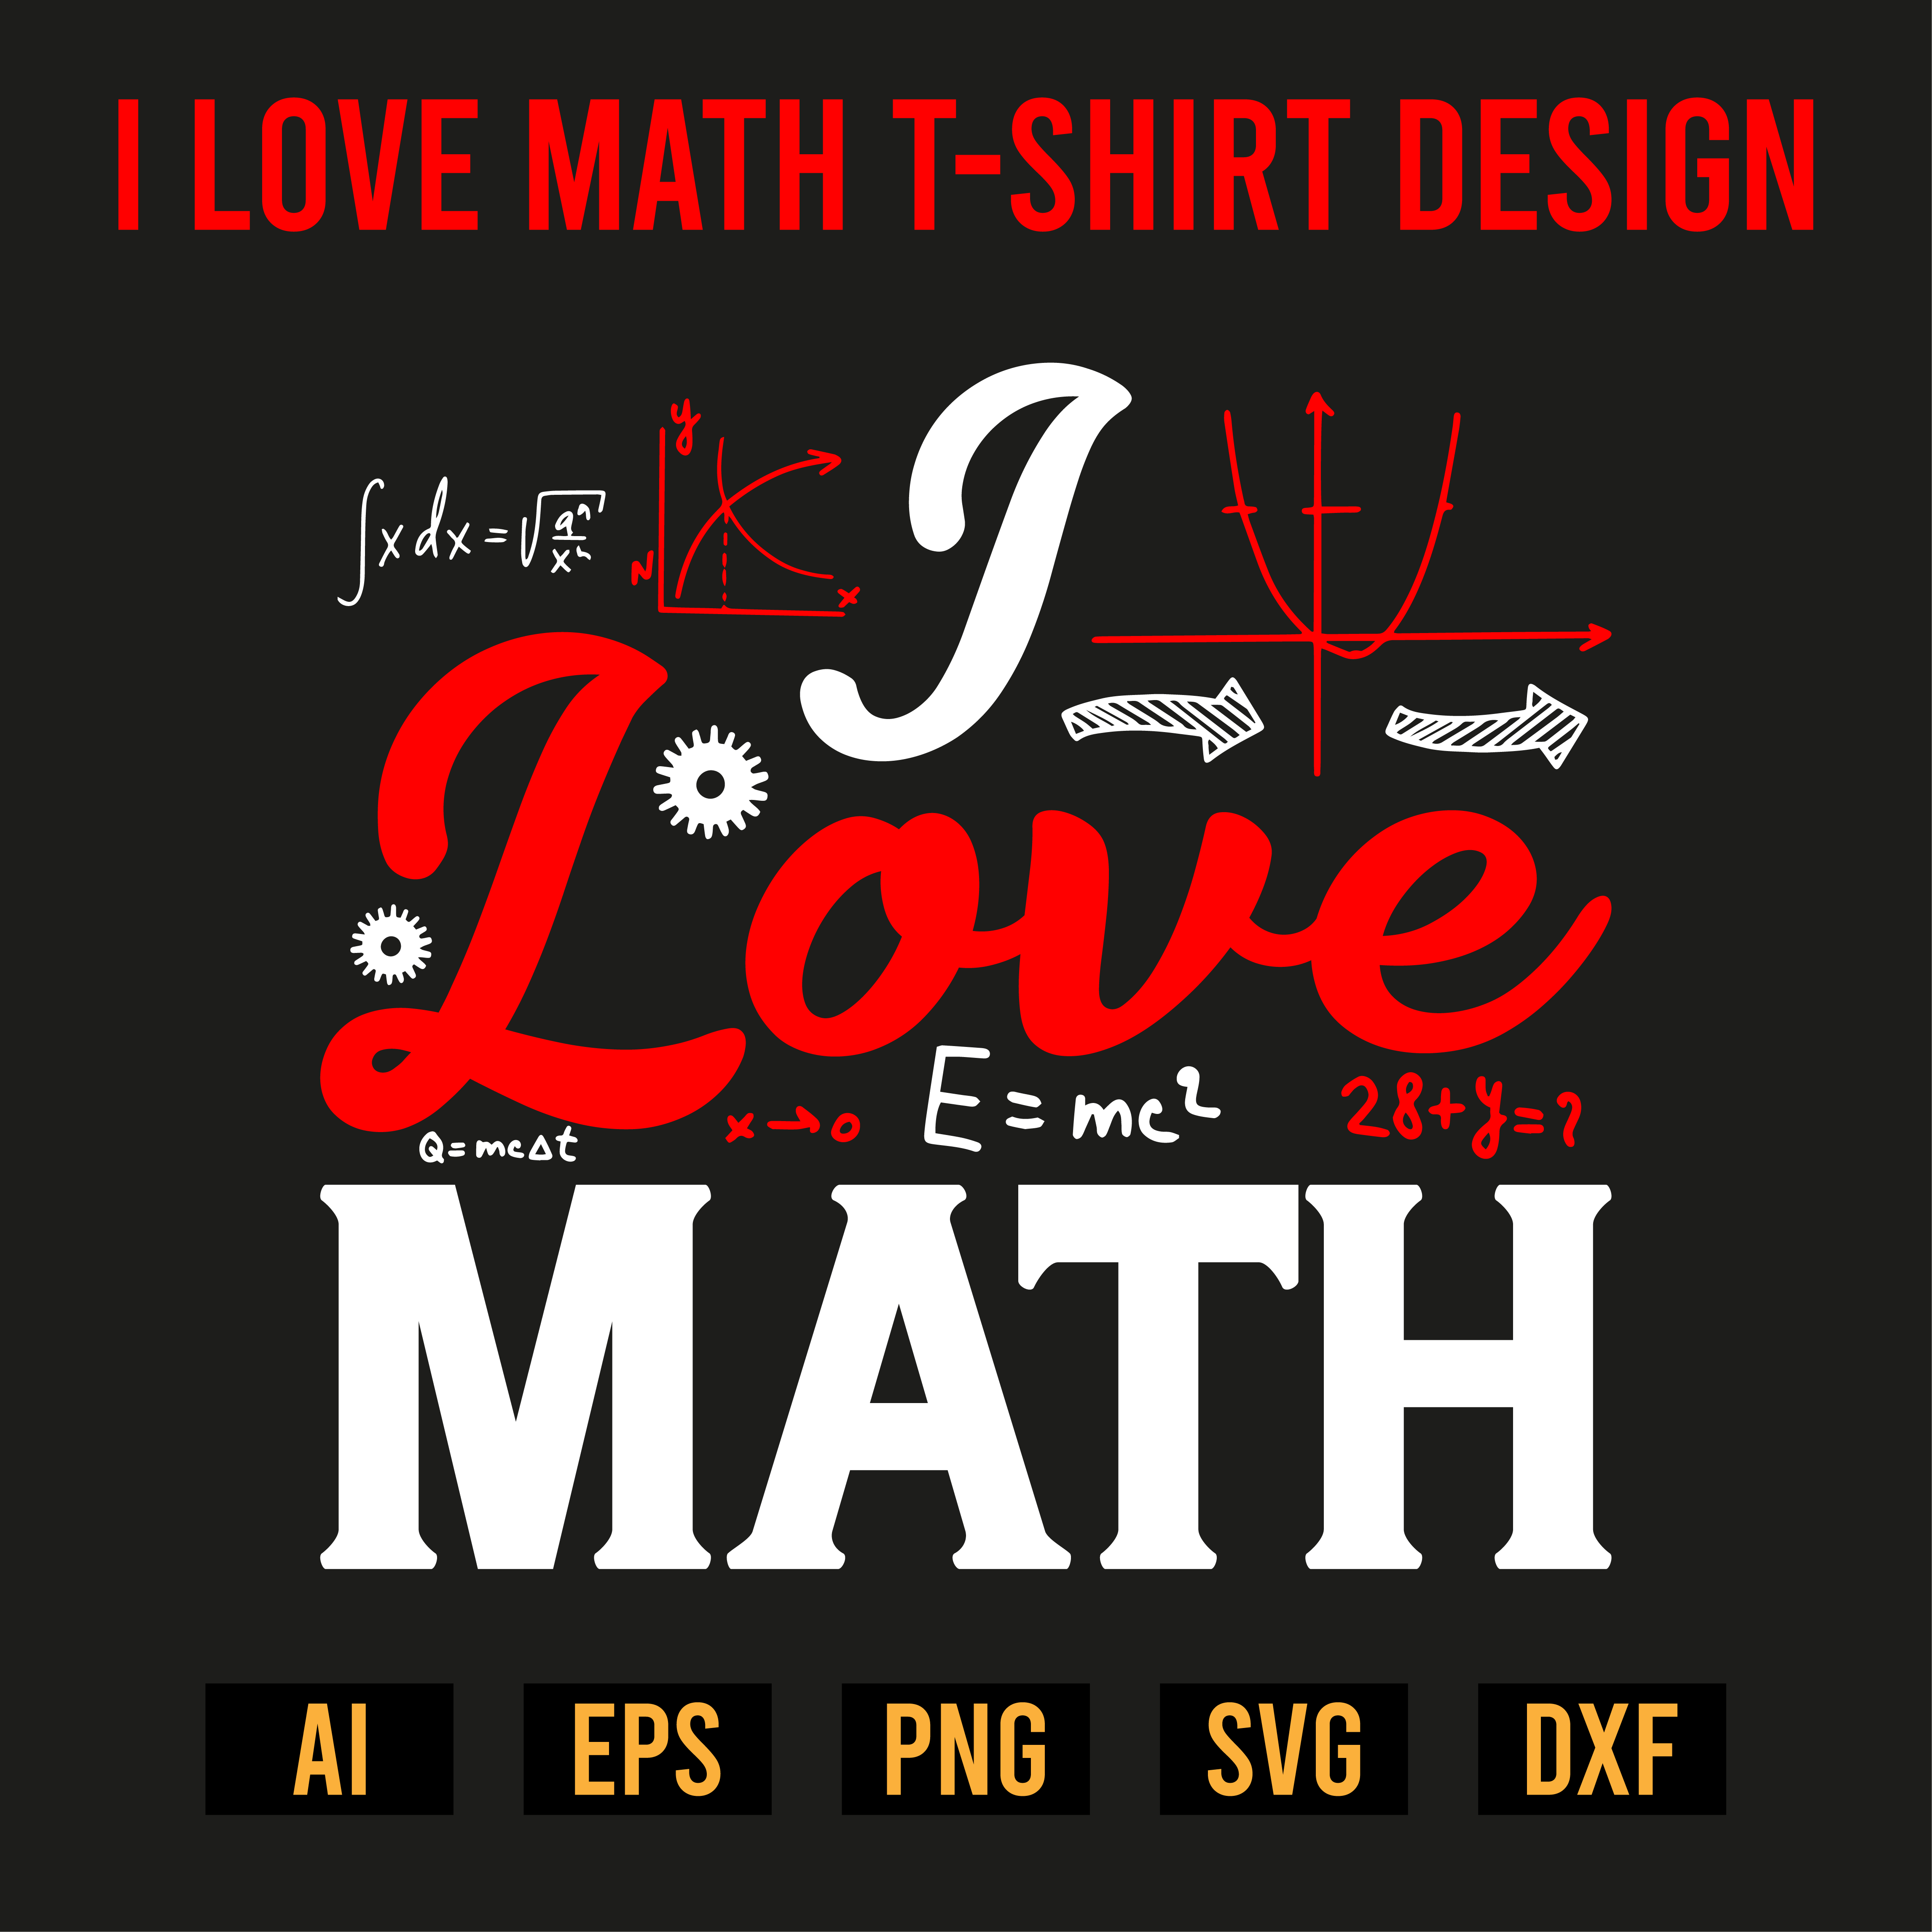 I Love Math T-Shirt Design cover image.